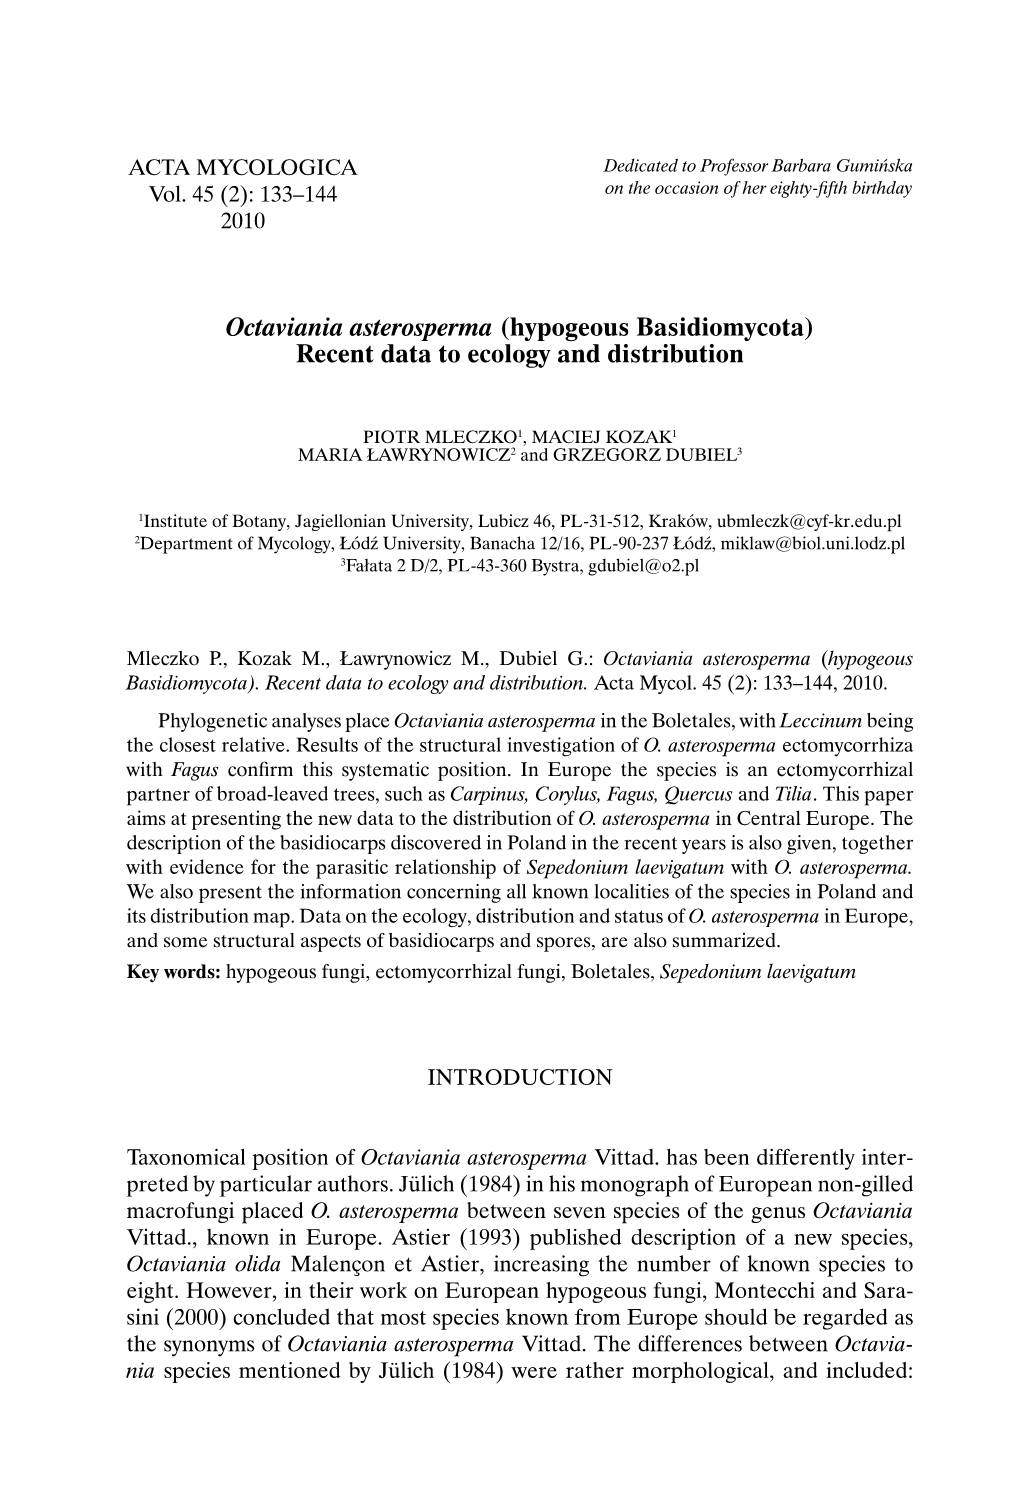 Octaviania Asterosperma (Hypogeous Basidiomycota) Recent Data to Ecology and Distribution